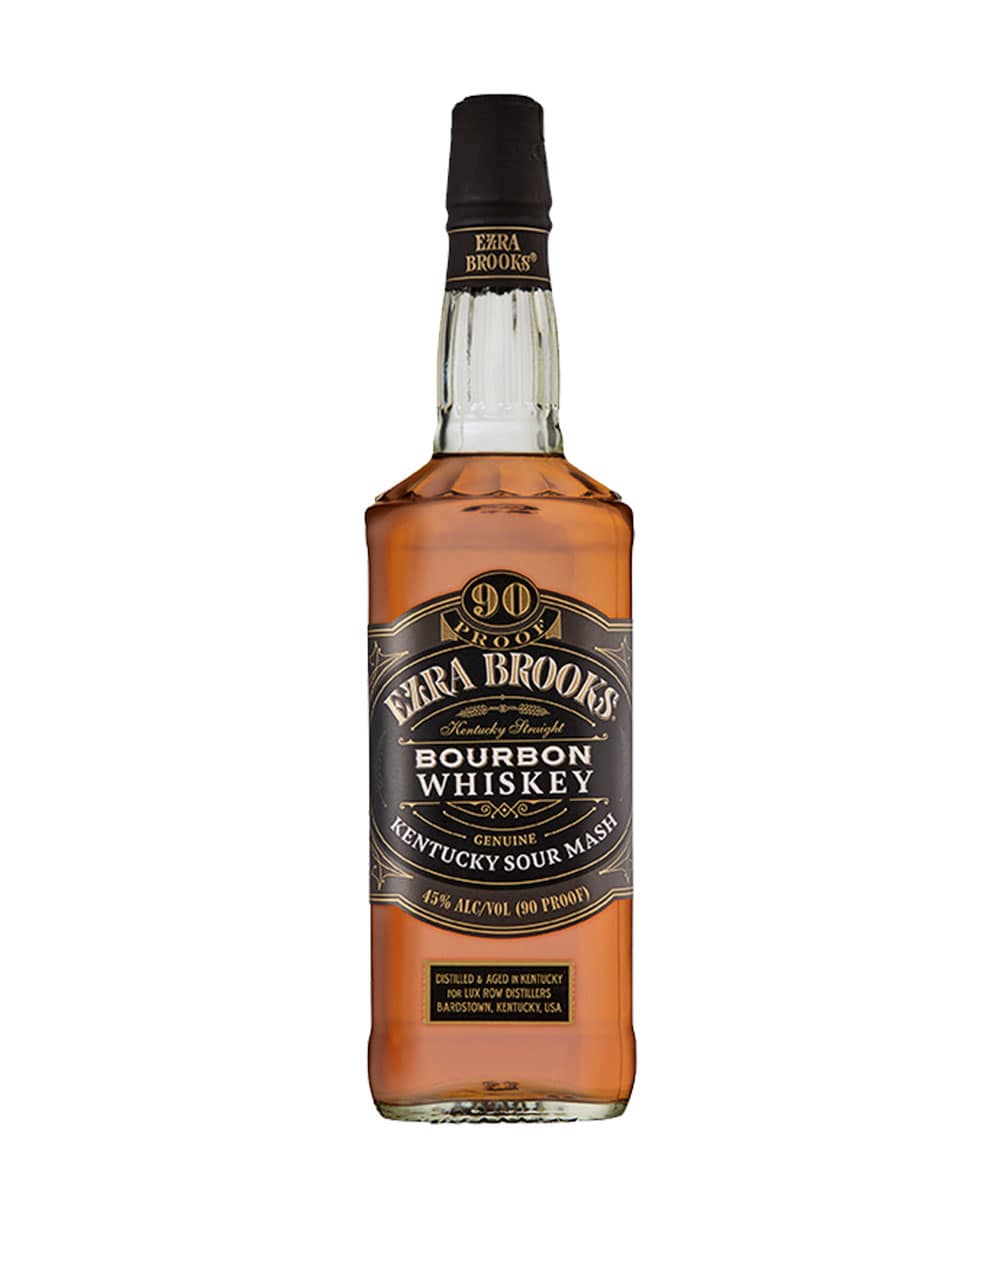 The Glenlivet Caribbean Reserve Scotch Whisky